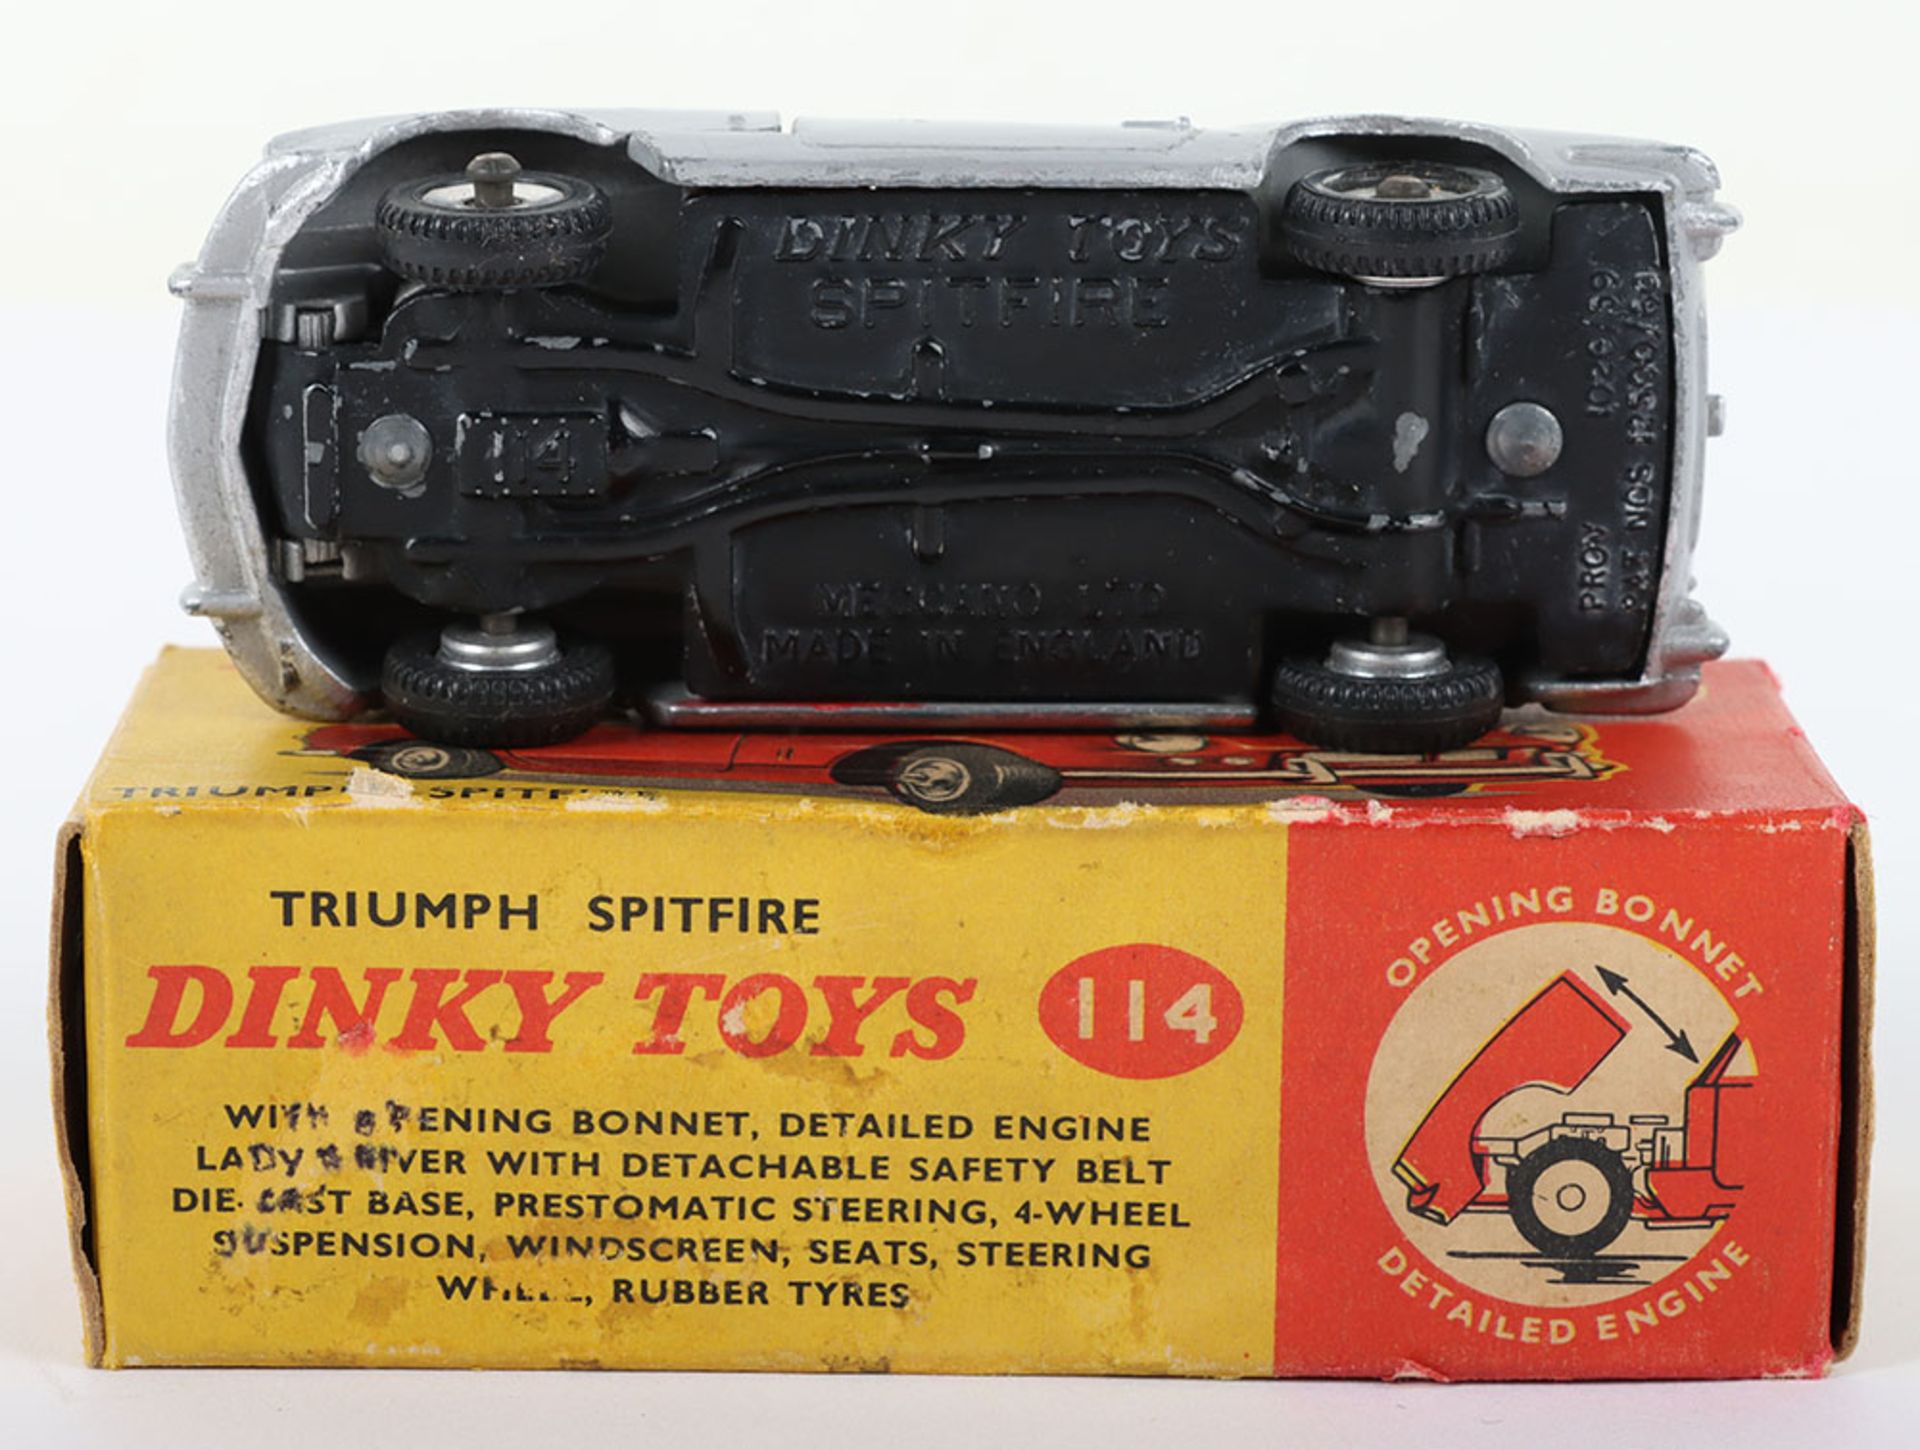 Dinky Toys 114 Triumph Spitfire Car - Image 3 of 3